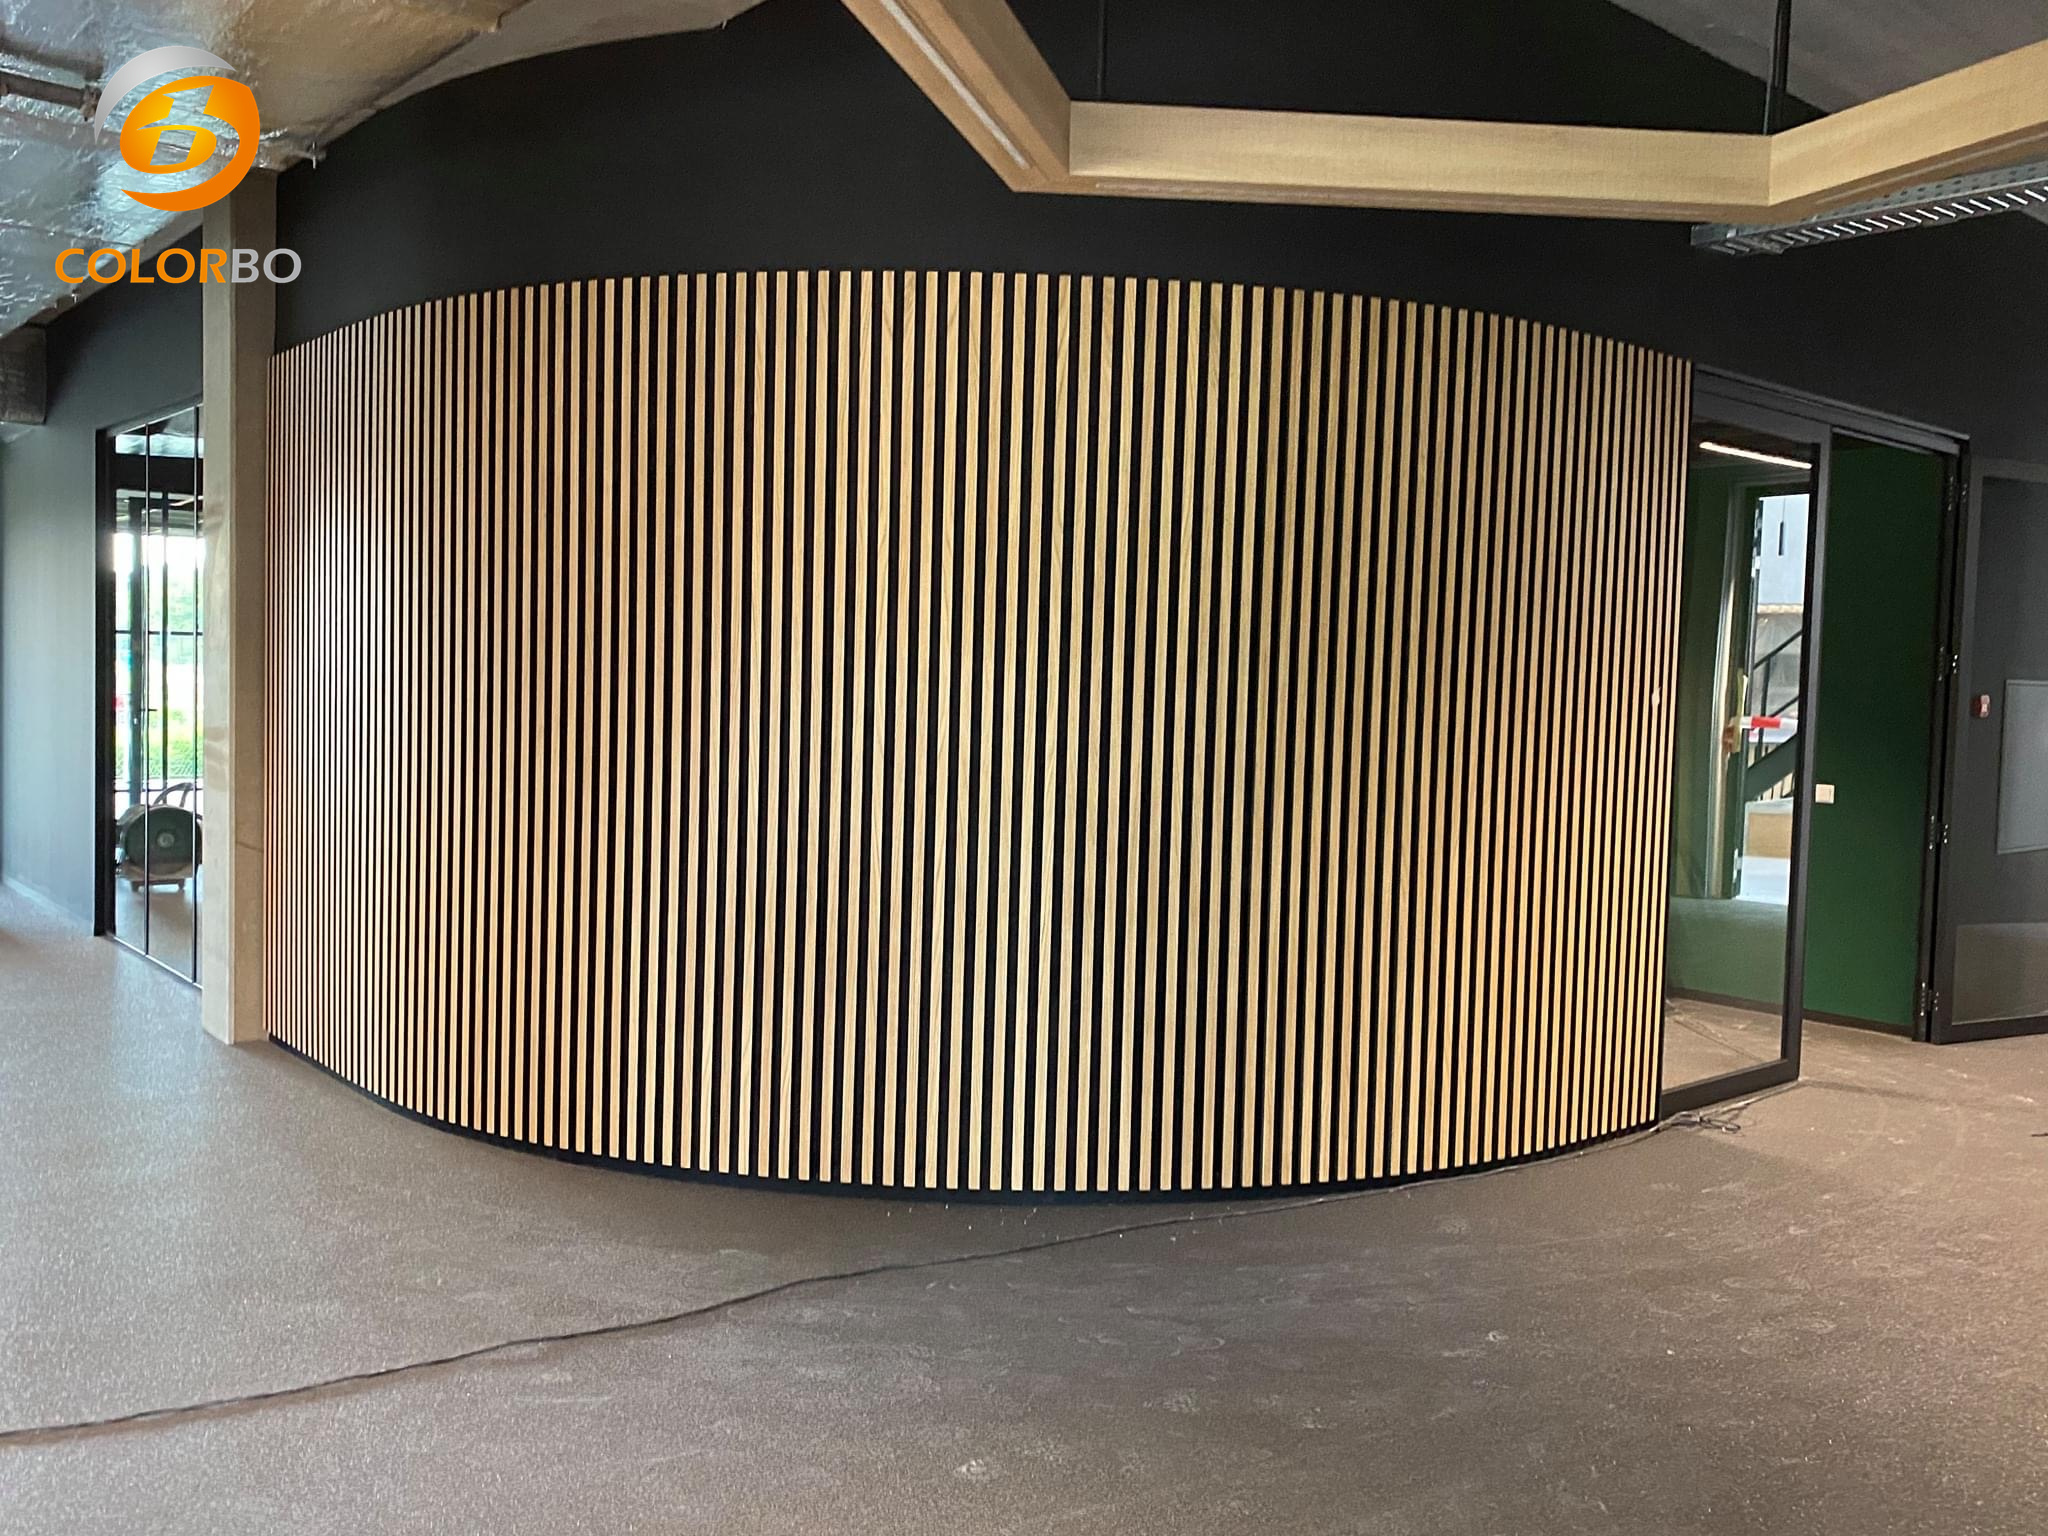 Veneer Surface PET Acoustic Panel Wood Panels for Walls